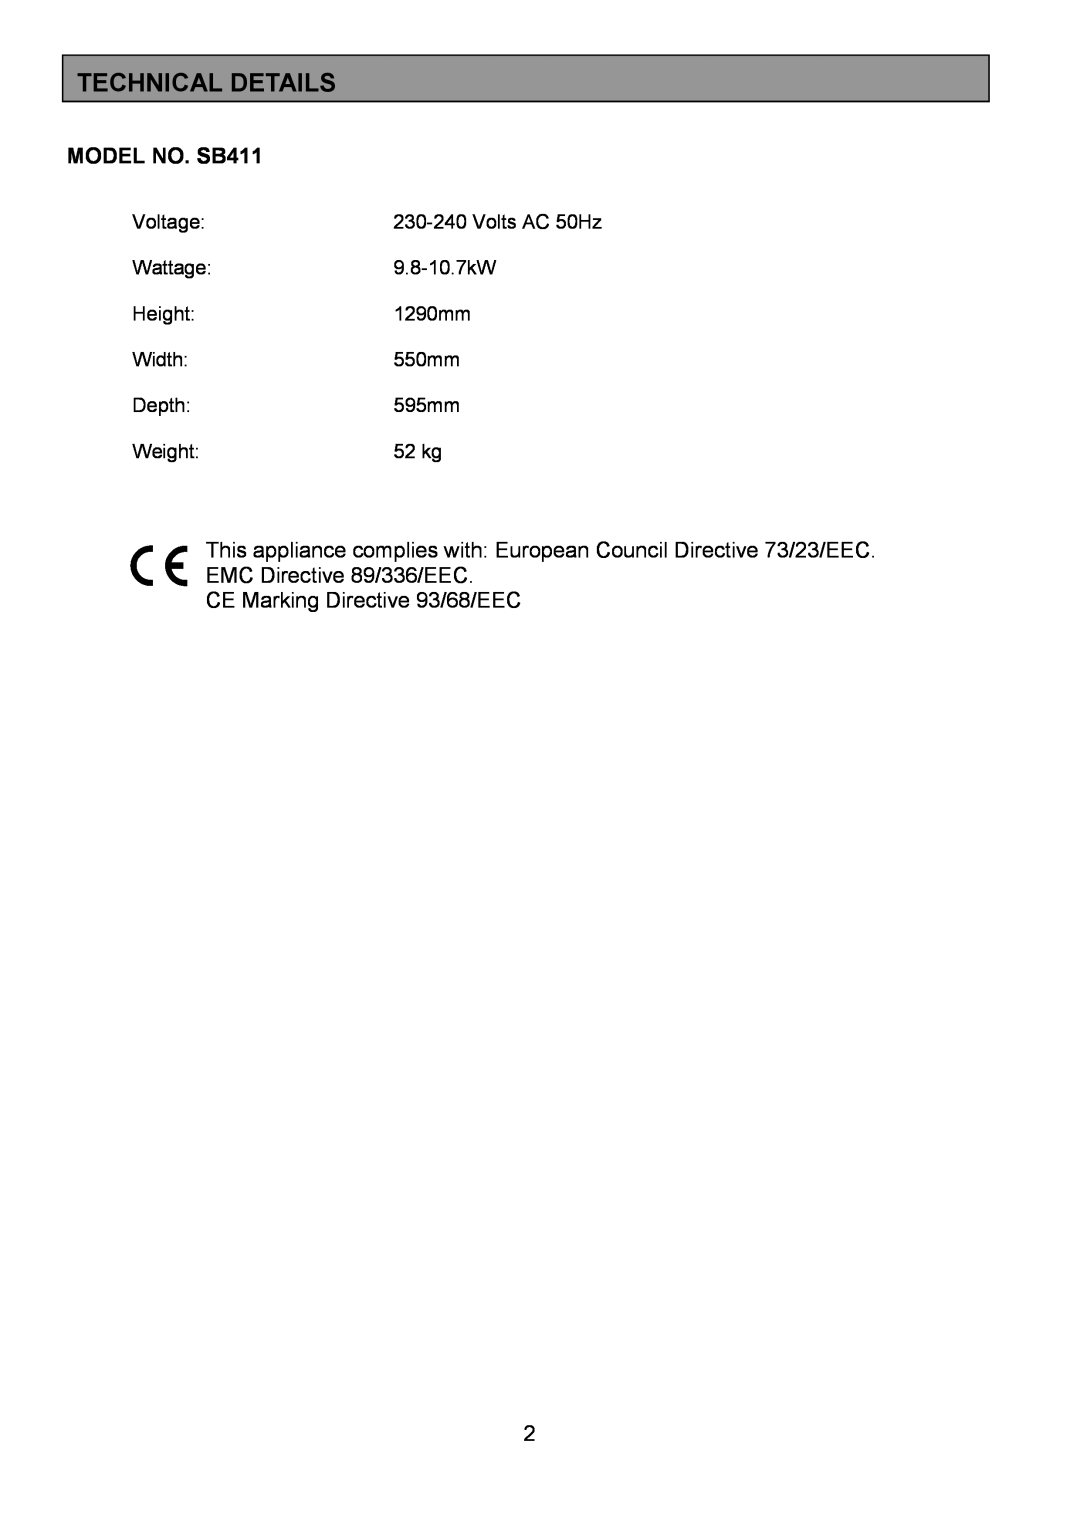 Tricity Bendix Technical Details, MODEL NO. SB411, Voltage, 230-240Volts AC 50Hz, Depth:595mm, Weight, 52 kg 